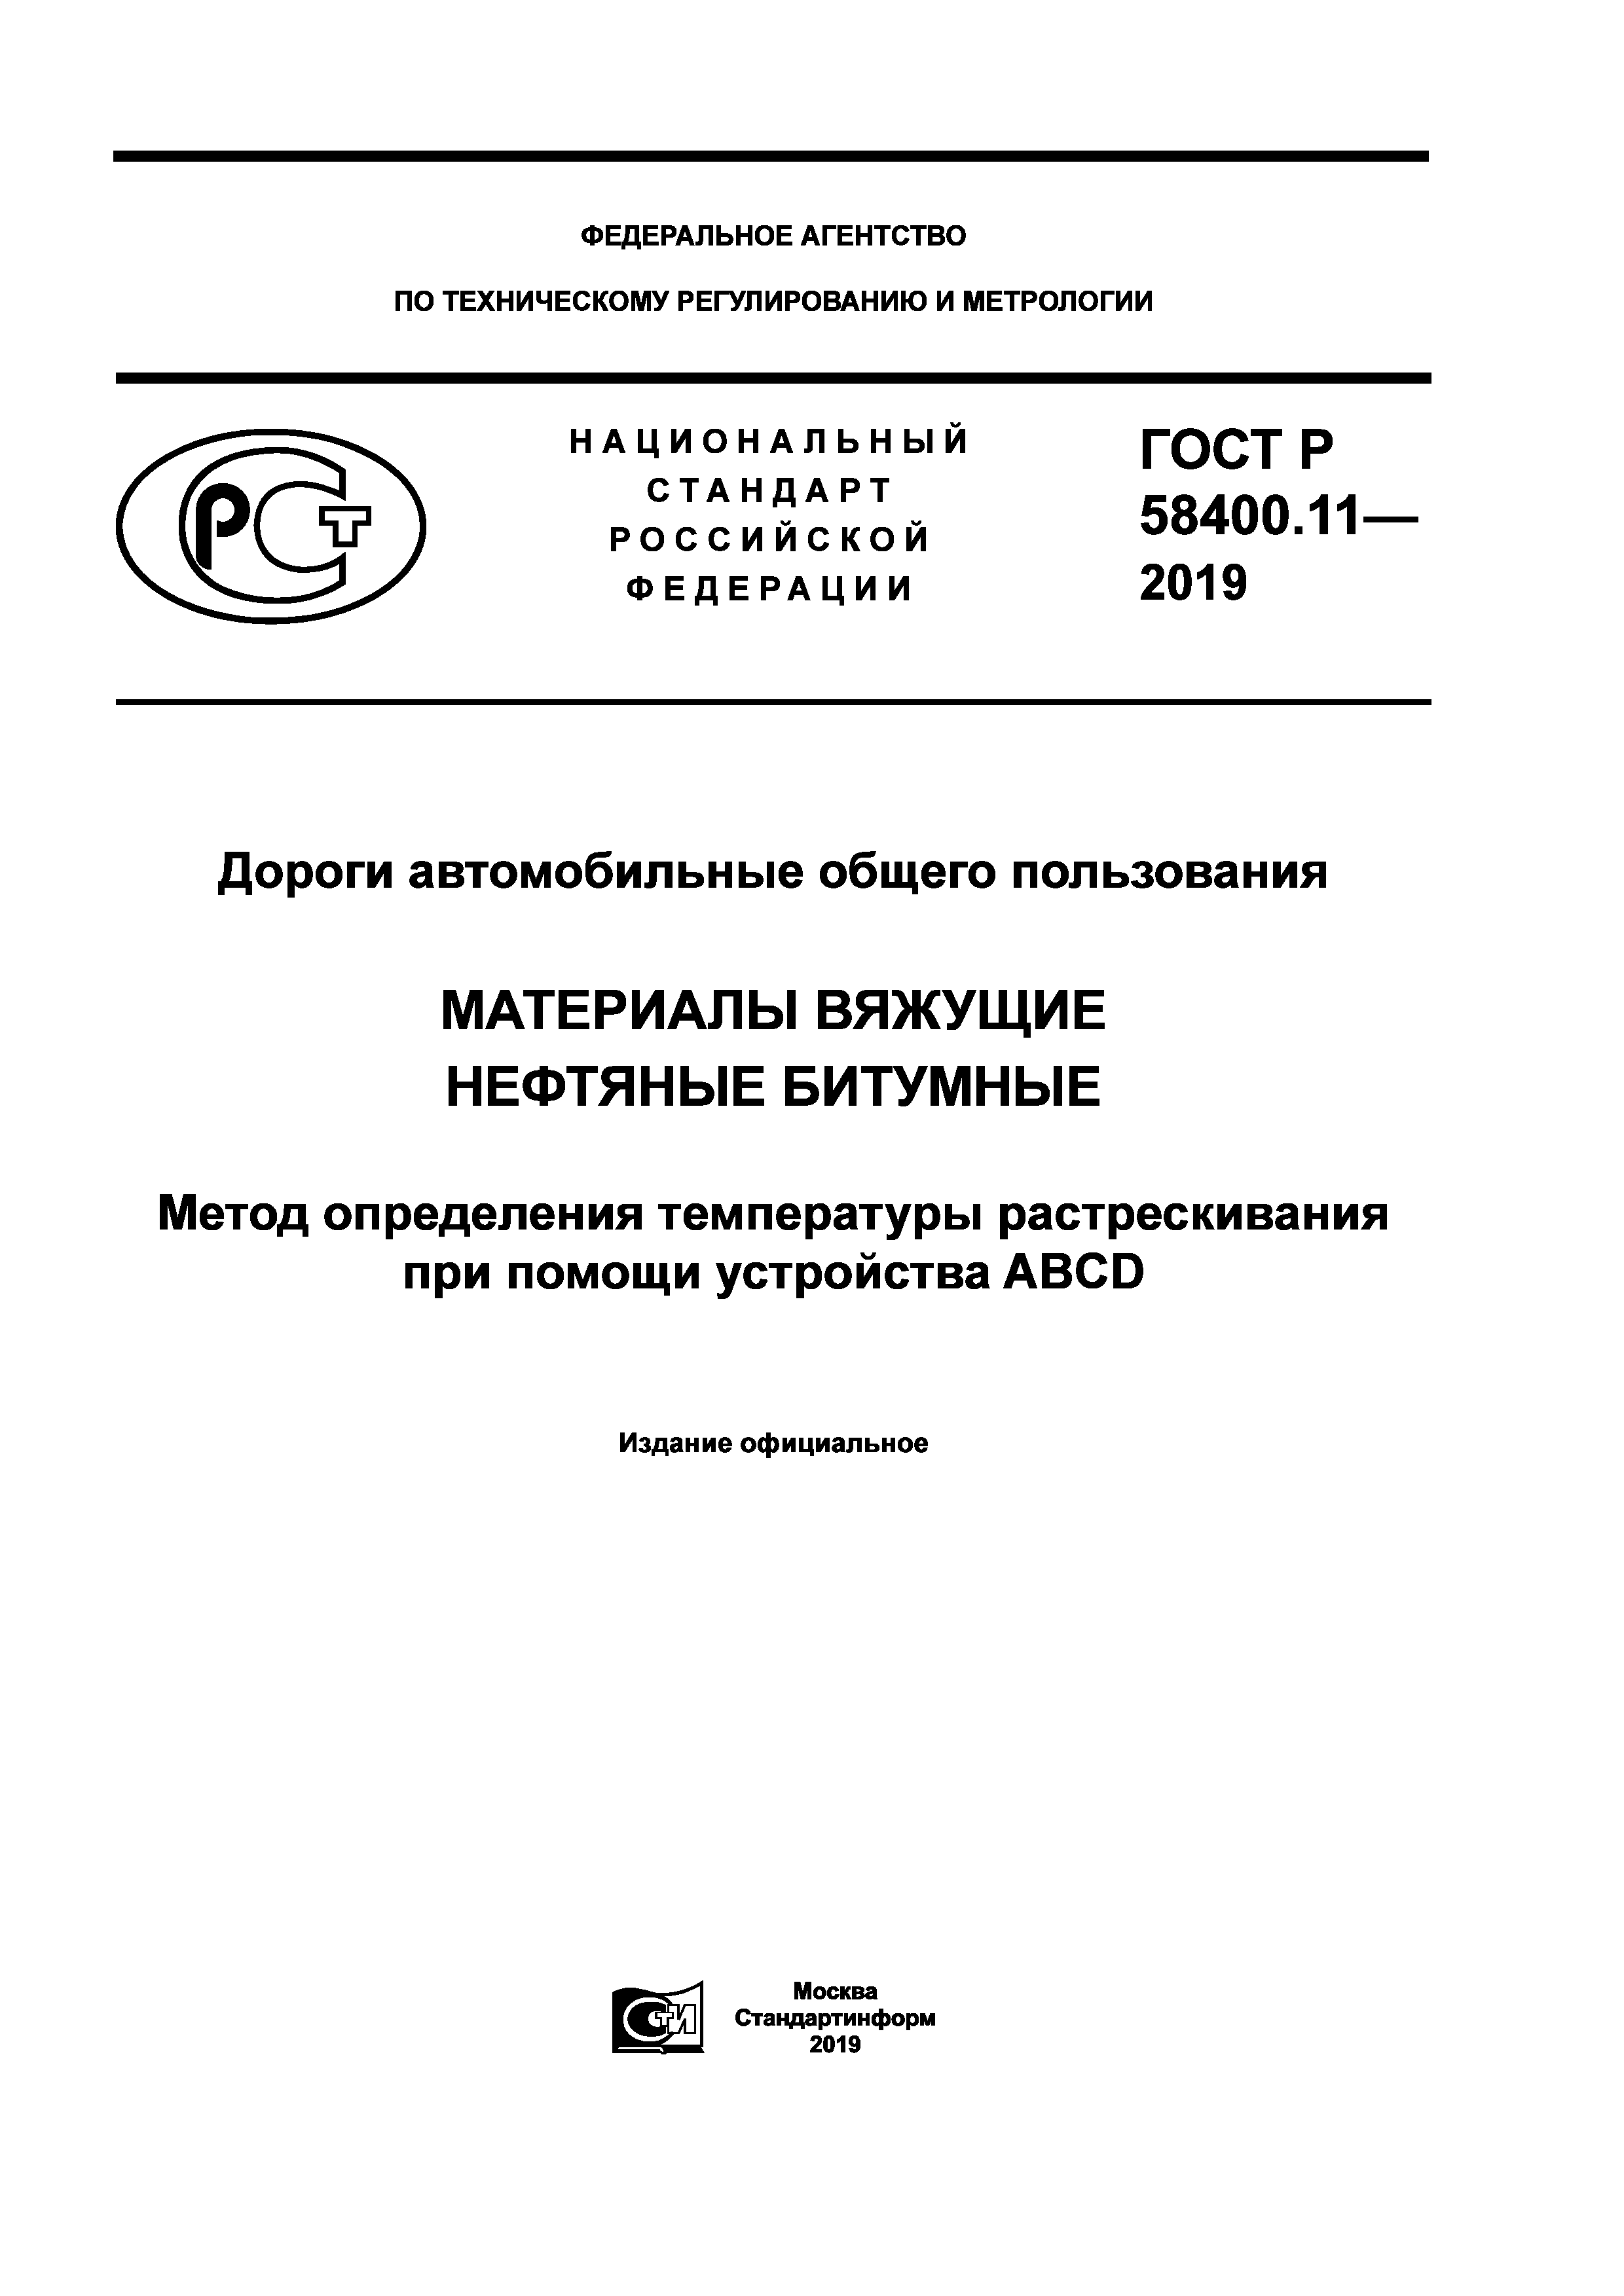 ГОСТ Р 58400.11-2019